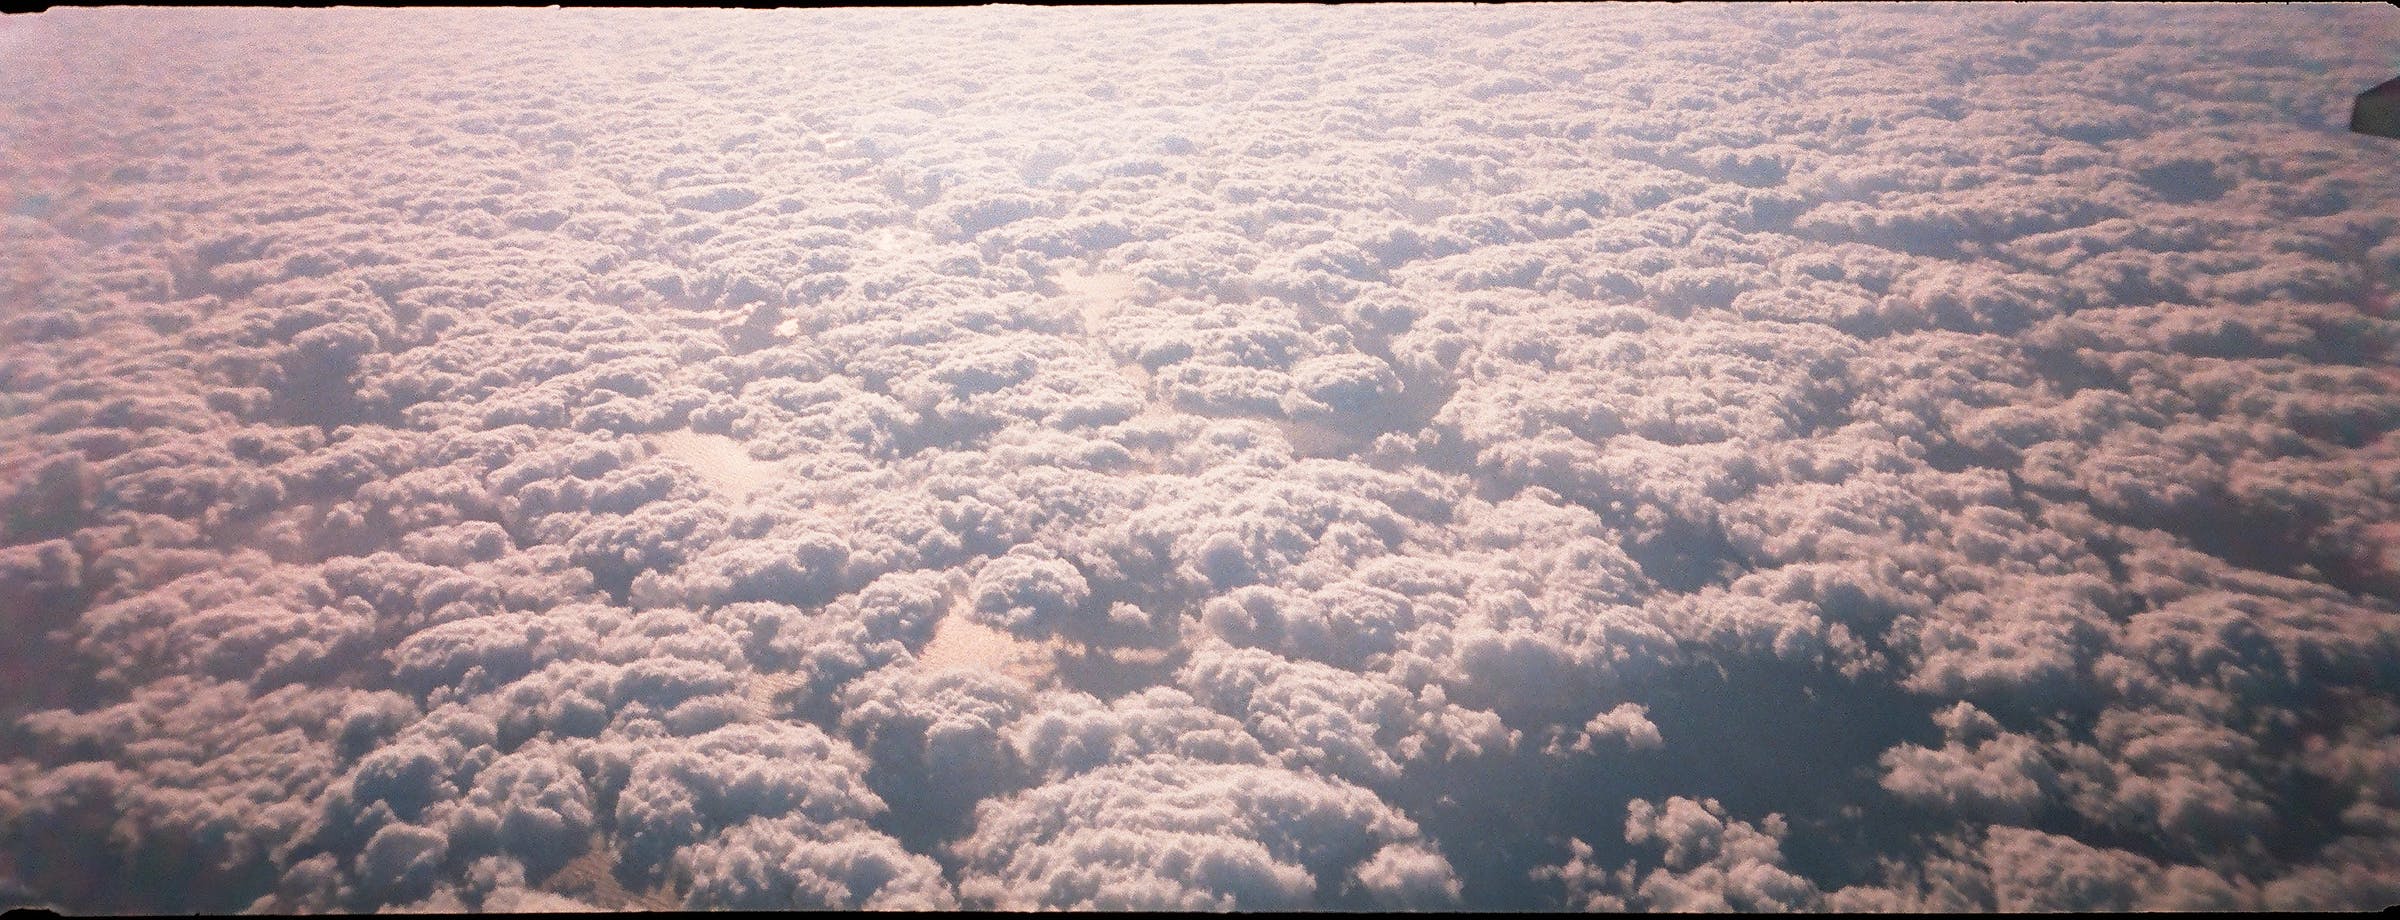 Cloud or Heaven?